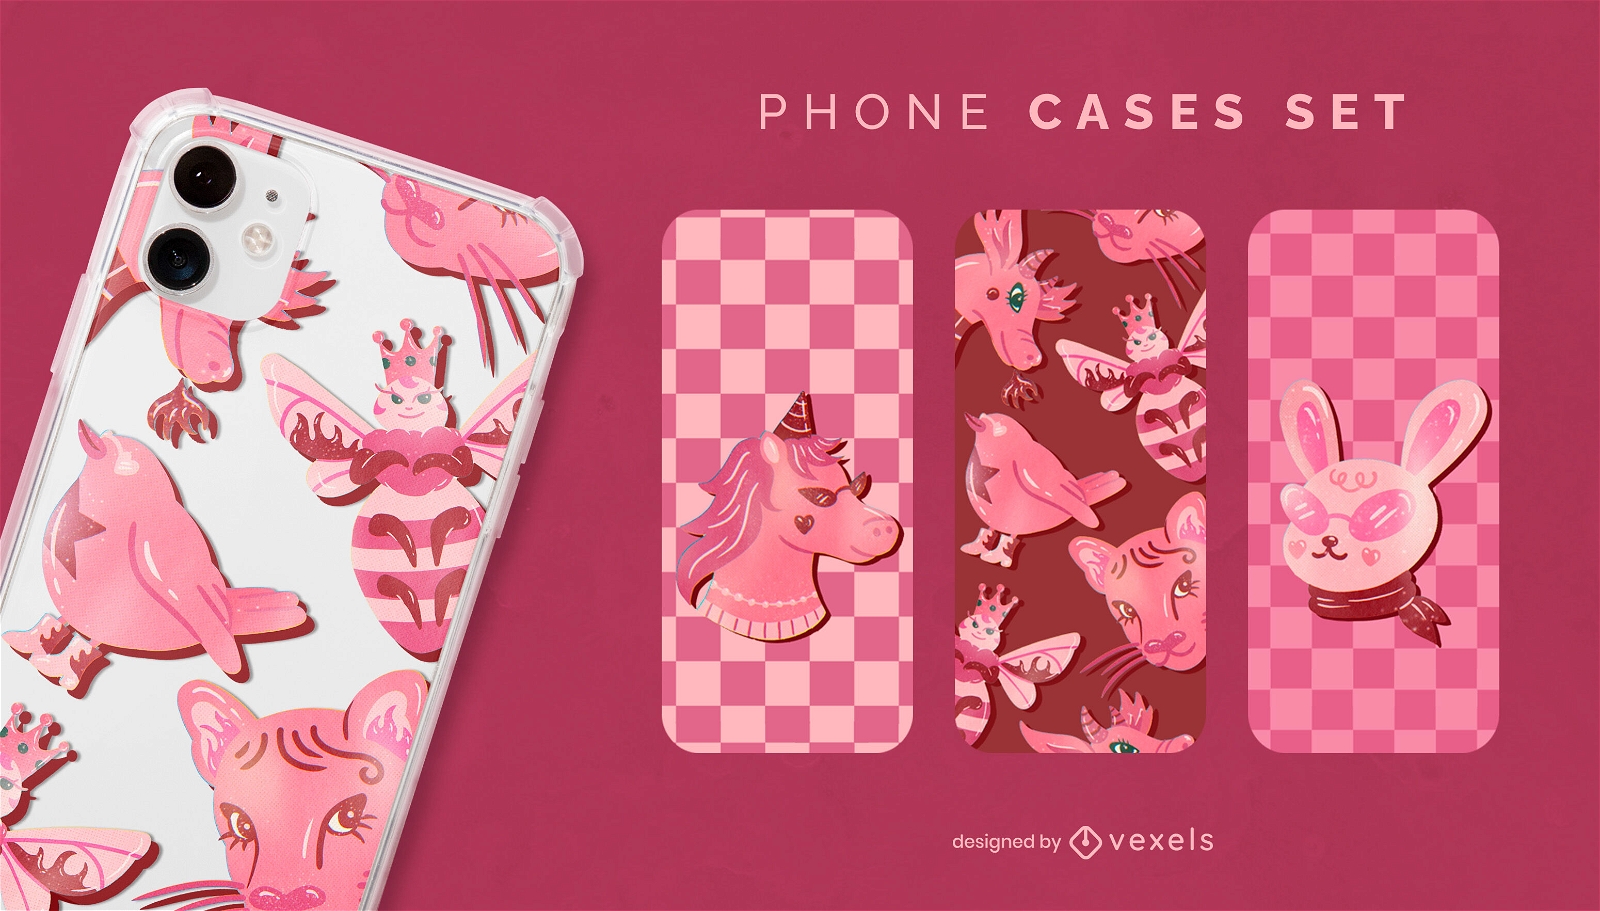 Adorable pink creature phone cases set design